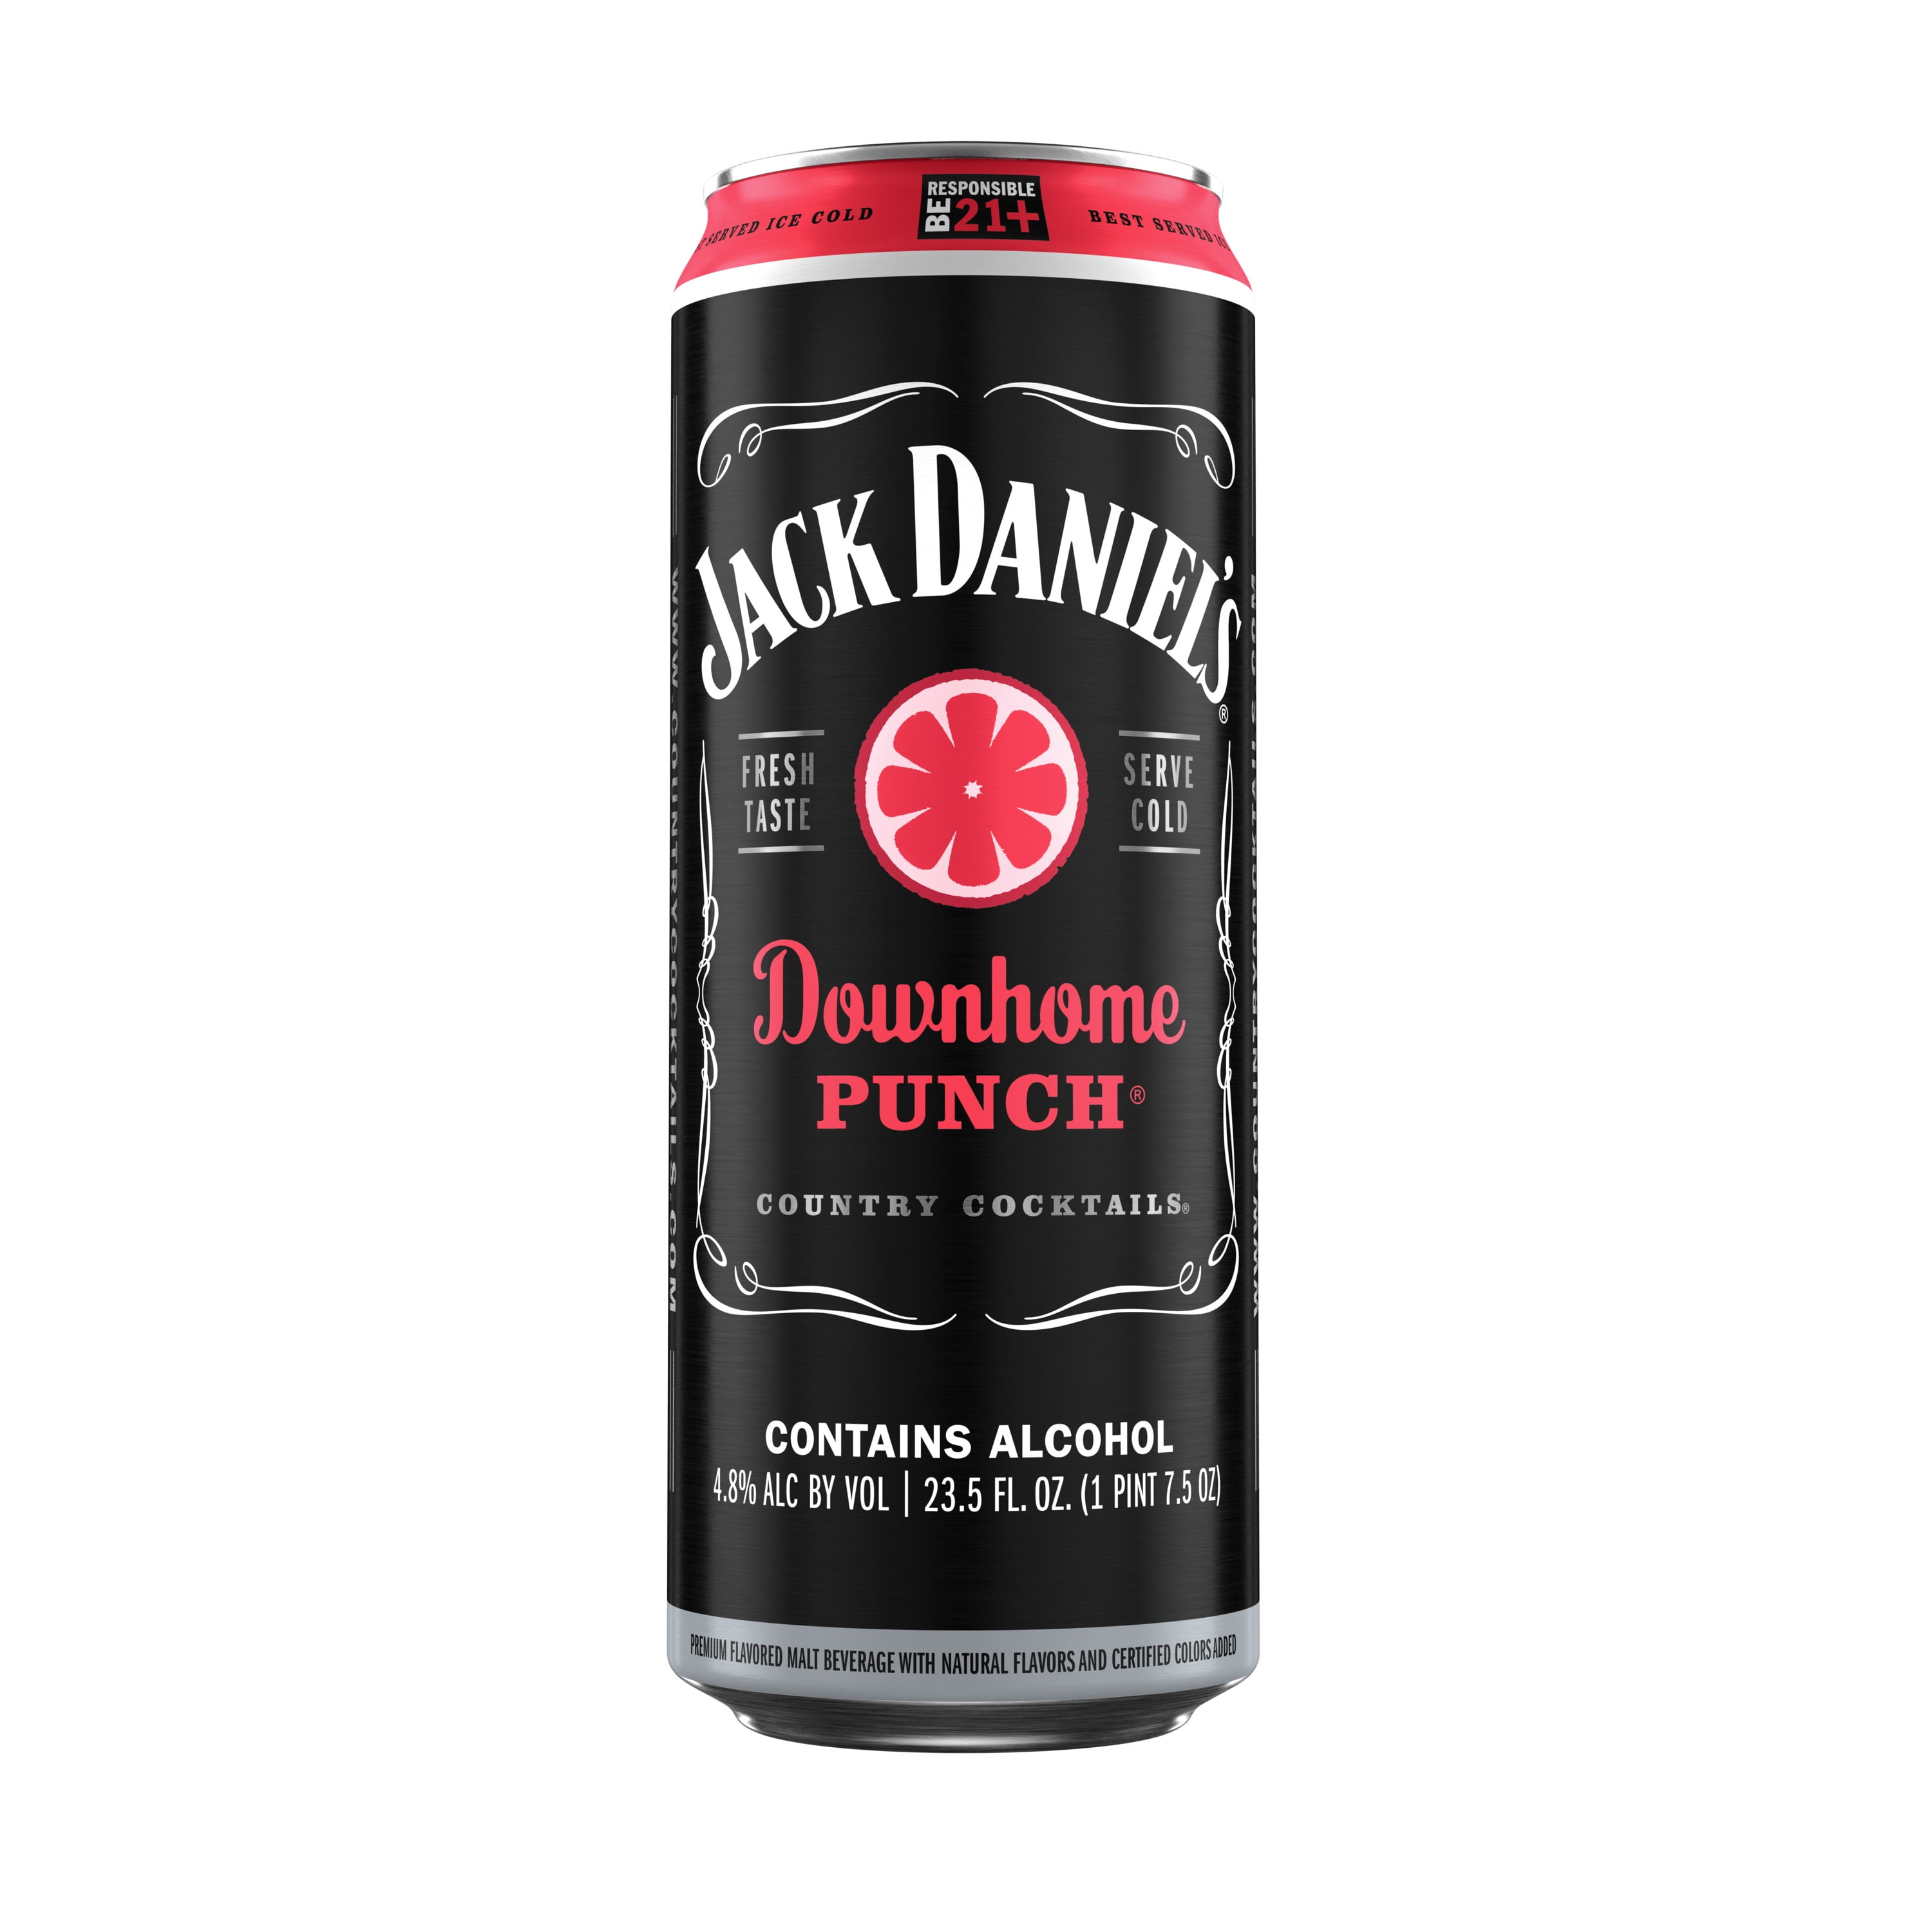 Джек Дэниэлс коктейль. Jack Daniels Watermelon Punch. Джек спик коктейль. Джек Фокс коктейль.